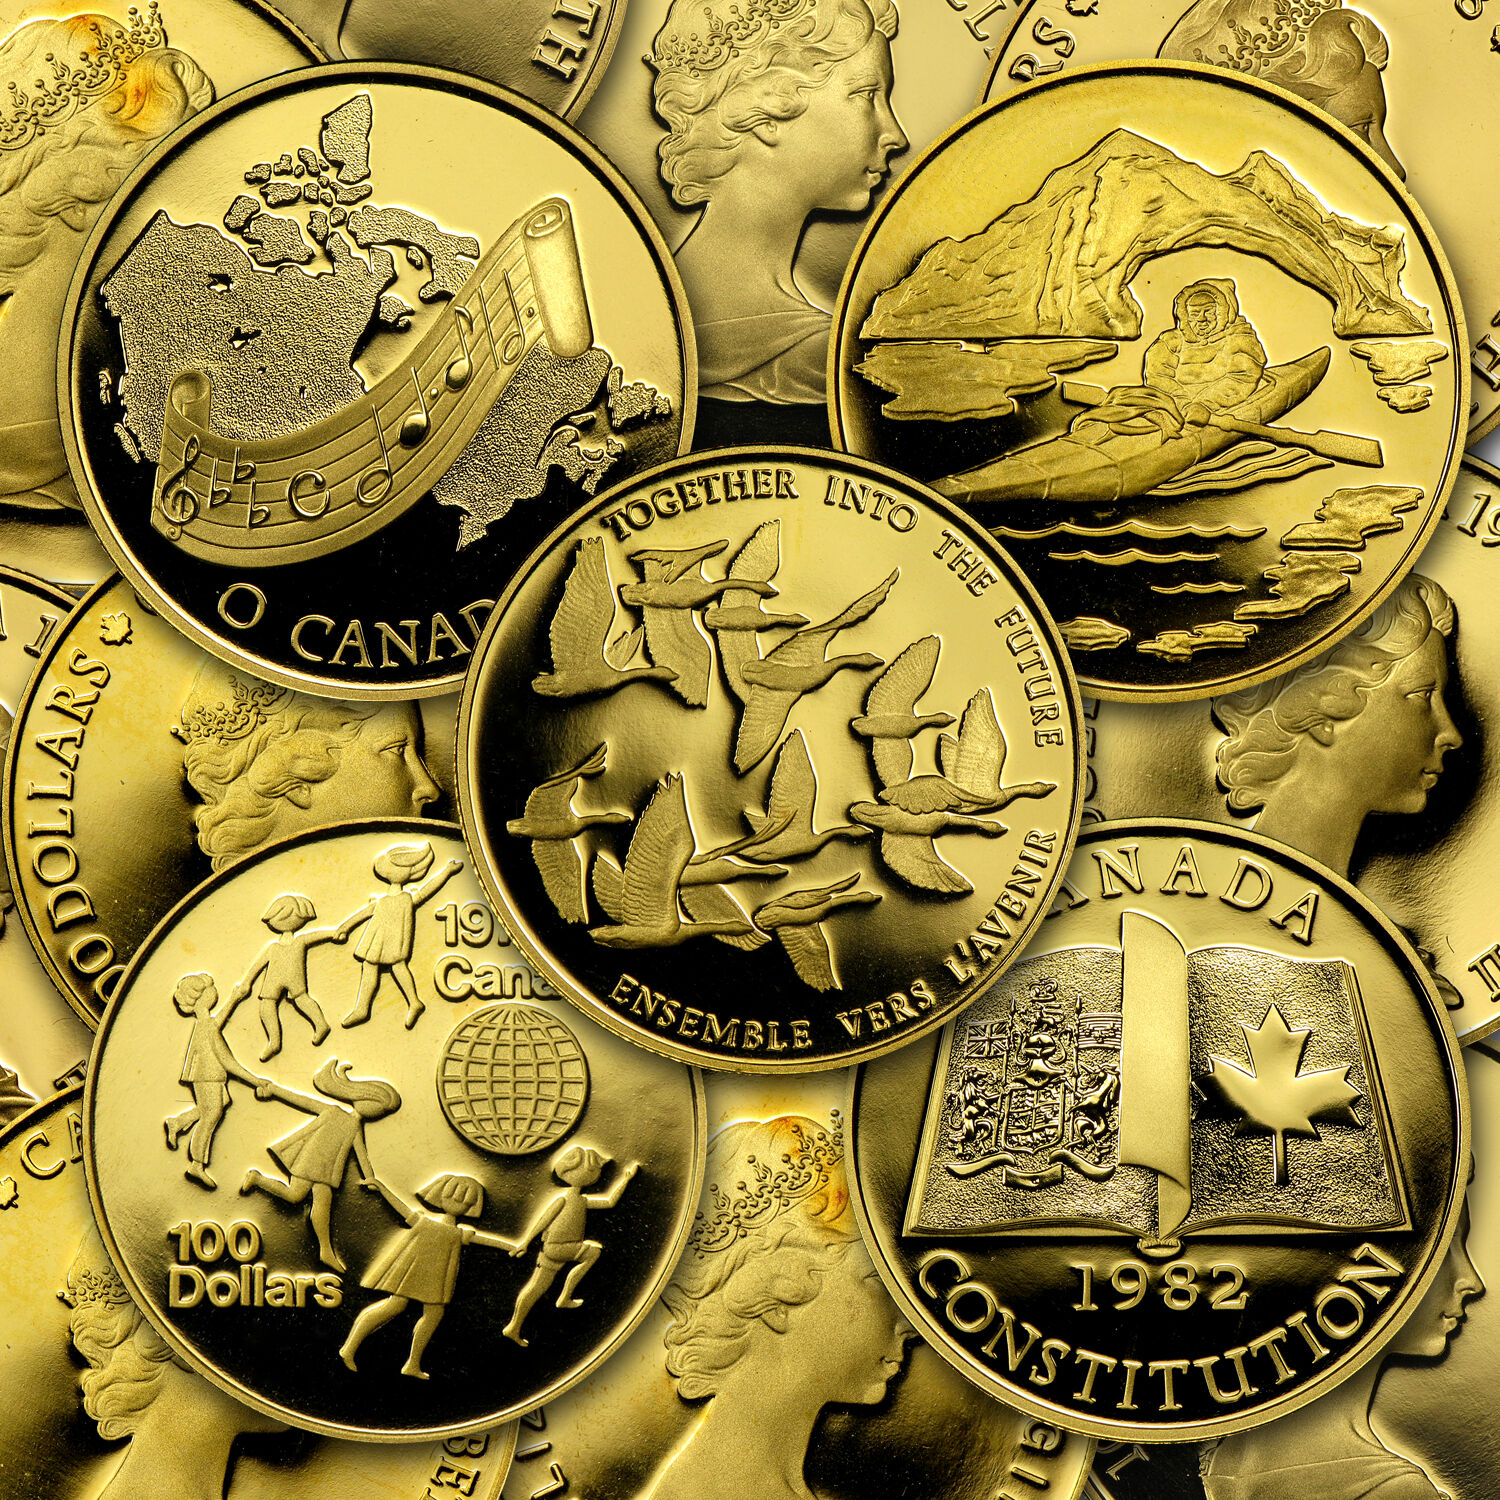 1/2 oz Proof Gold Canadian $100 Coin - Random Year Coin - SKU #68009